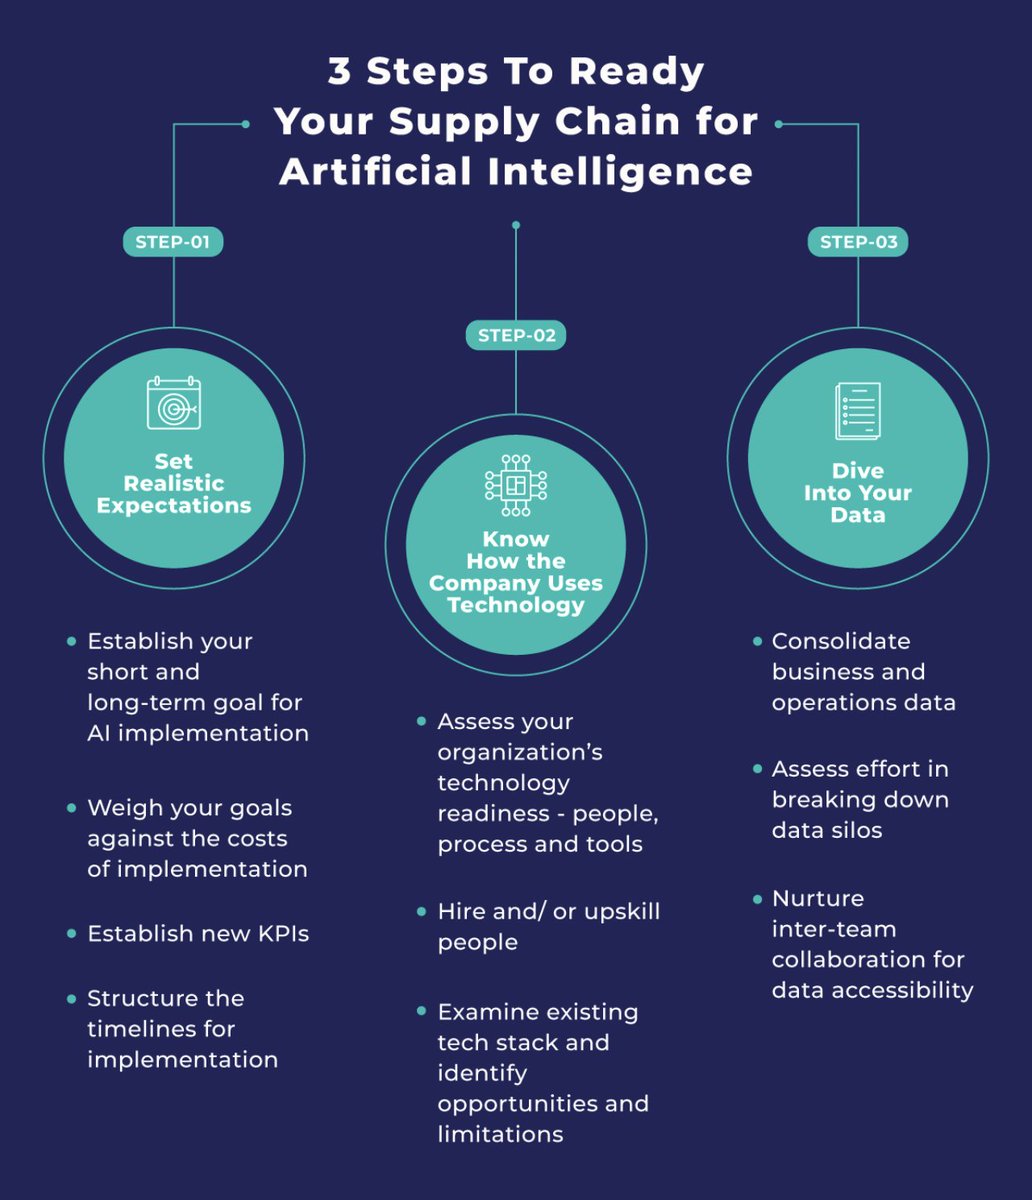 #Infographic: 3 Steps to Ready Your Supply Chain For AI!

#Industry40 #SupplyChain #Technology #AI #Blockchain #IOT #Manufacturing #Automation #Logistics #SmartFactory 

cc: @antgrasso @Nicochan33 @IanLJones98 @Fabriziobustama @ipfconline1 @KirkDBorne